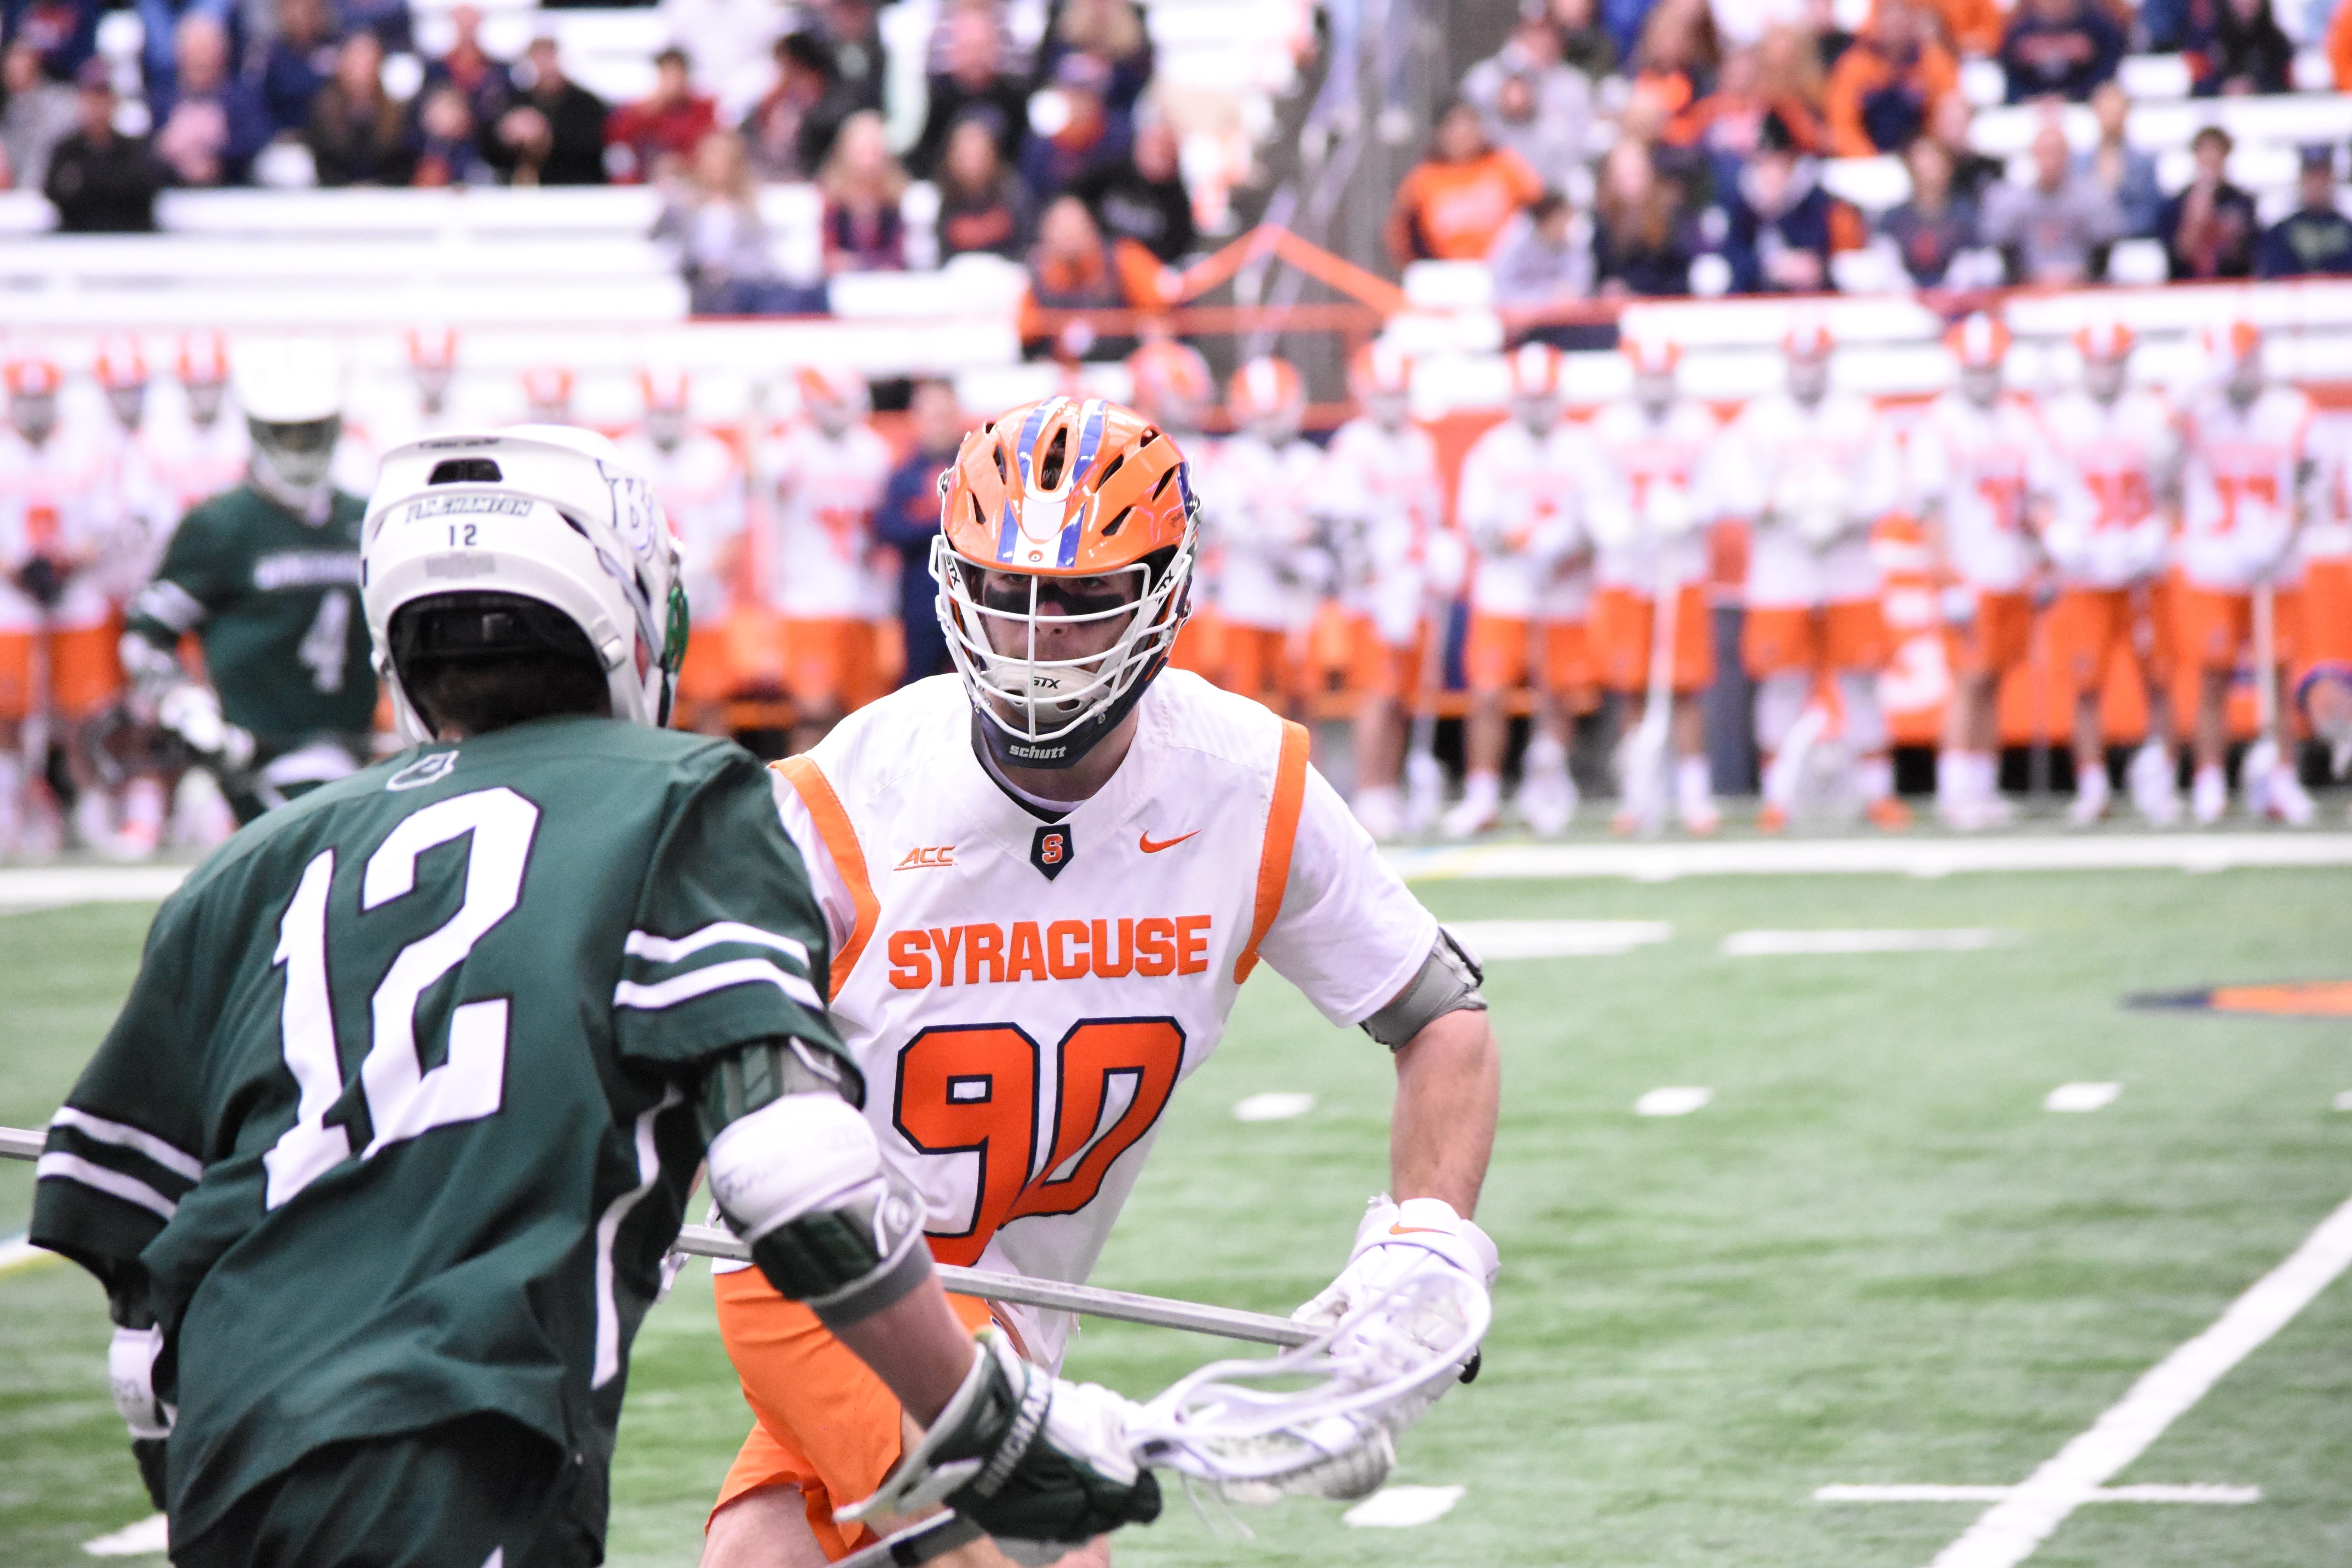 syracuse orange binghamton bearcats ncaa lacrosse college lacrosse division 1 photo